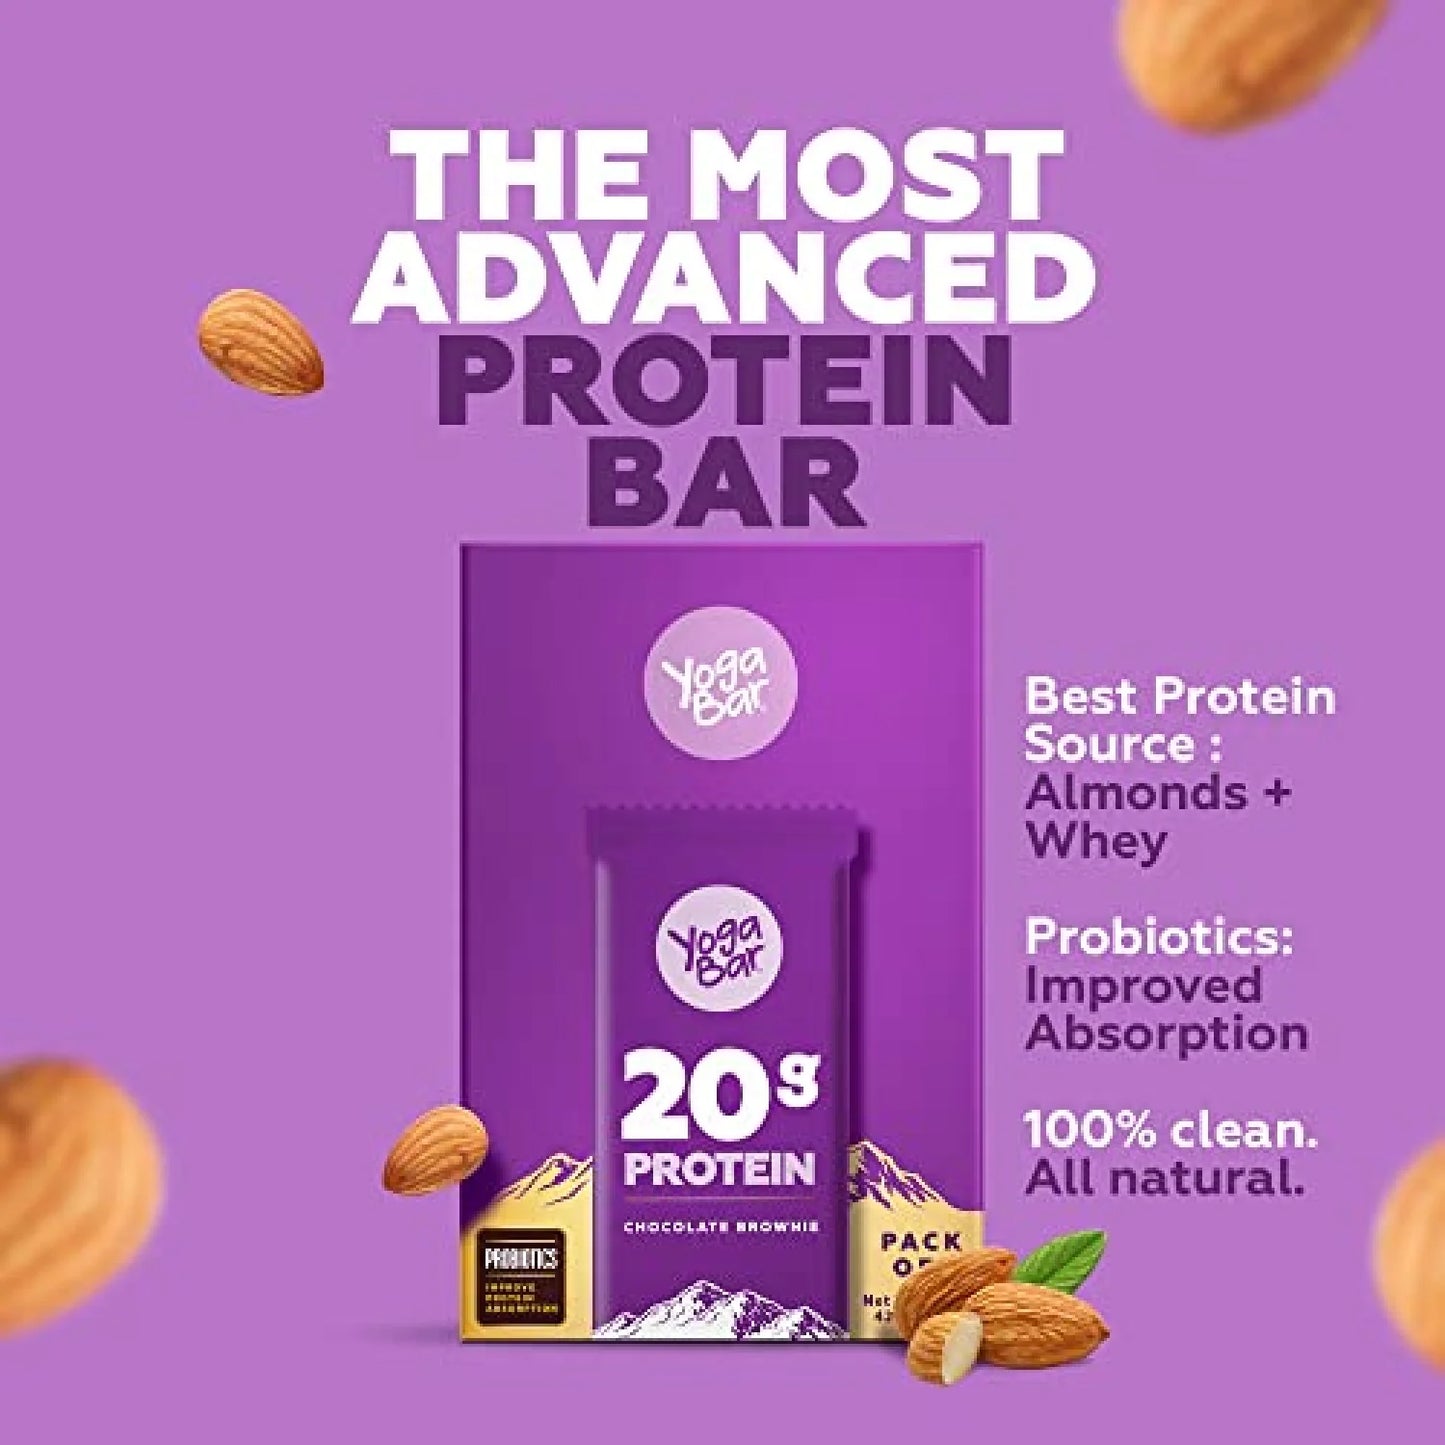 Chocolate Brownie 20g Protein Bar